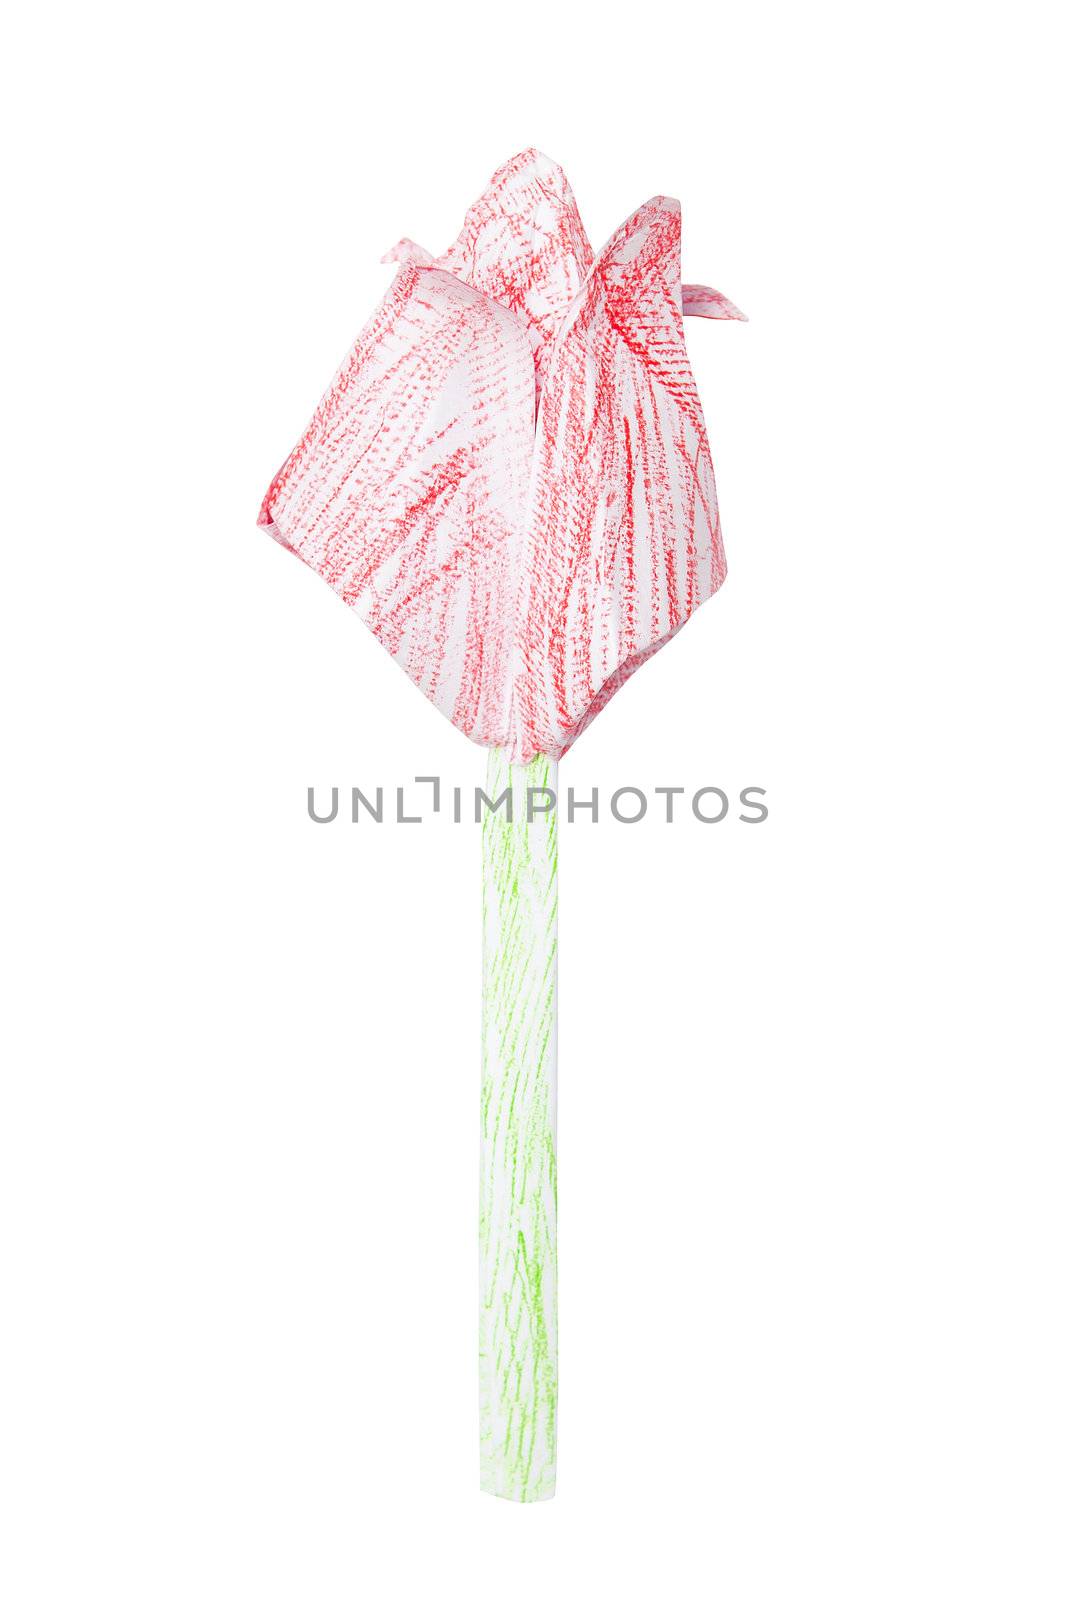 Origami tulip by Yaurinko